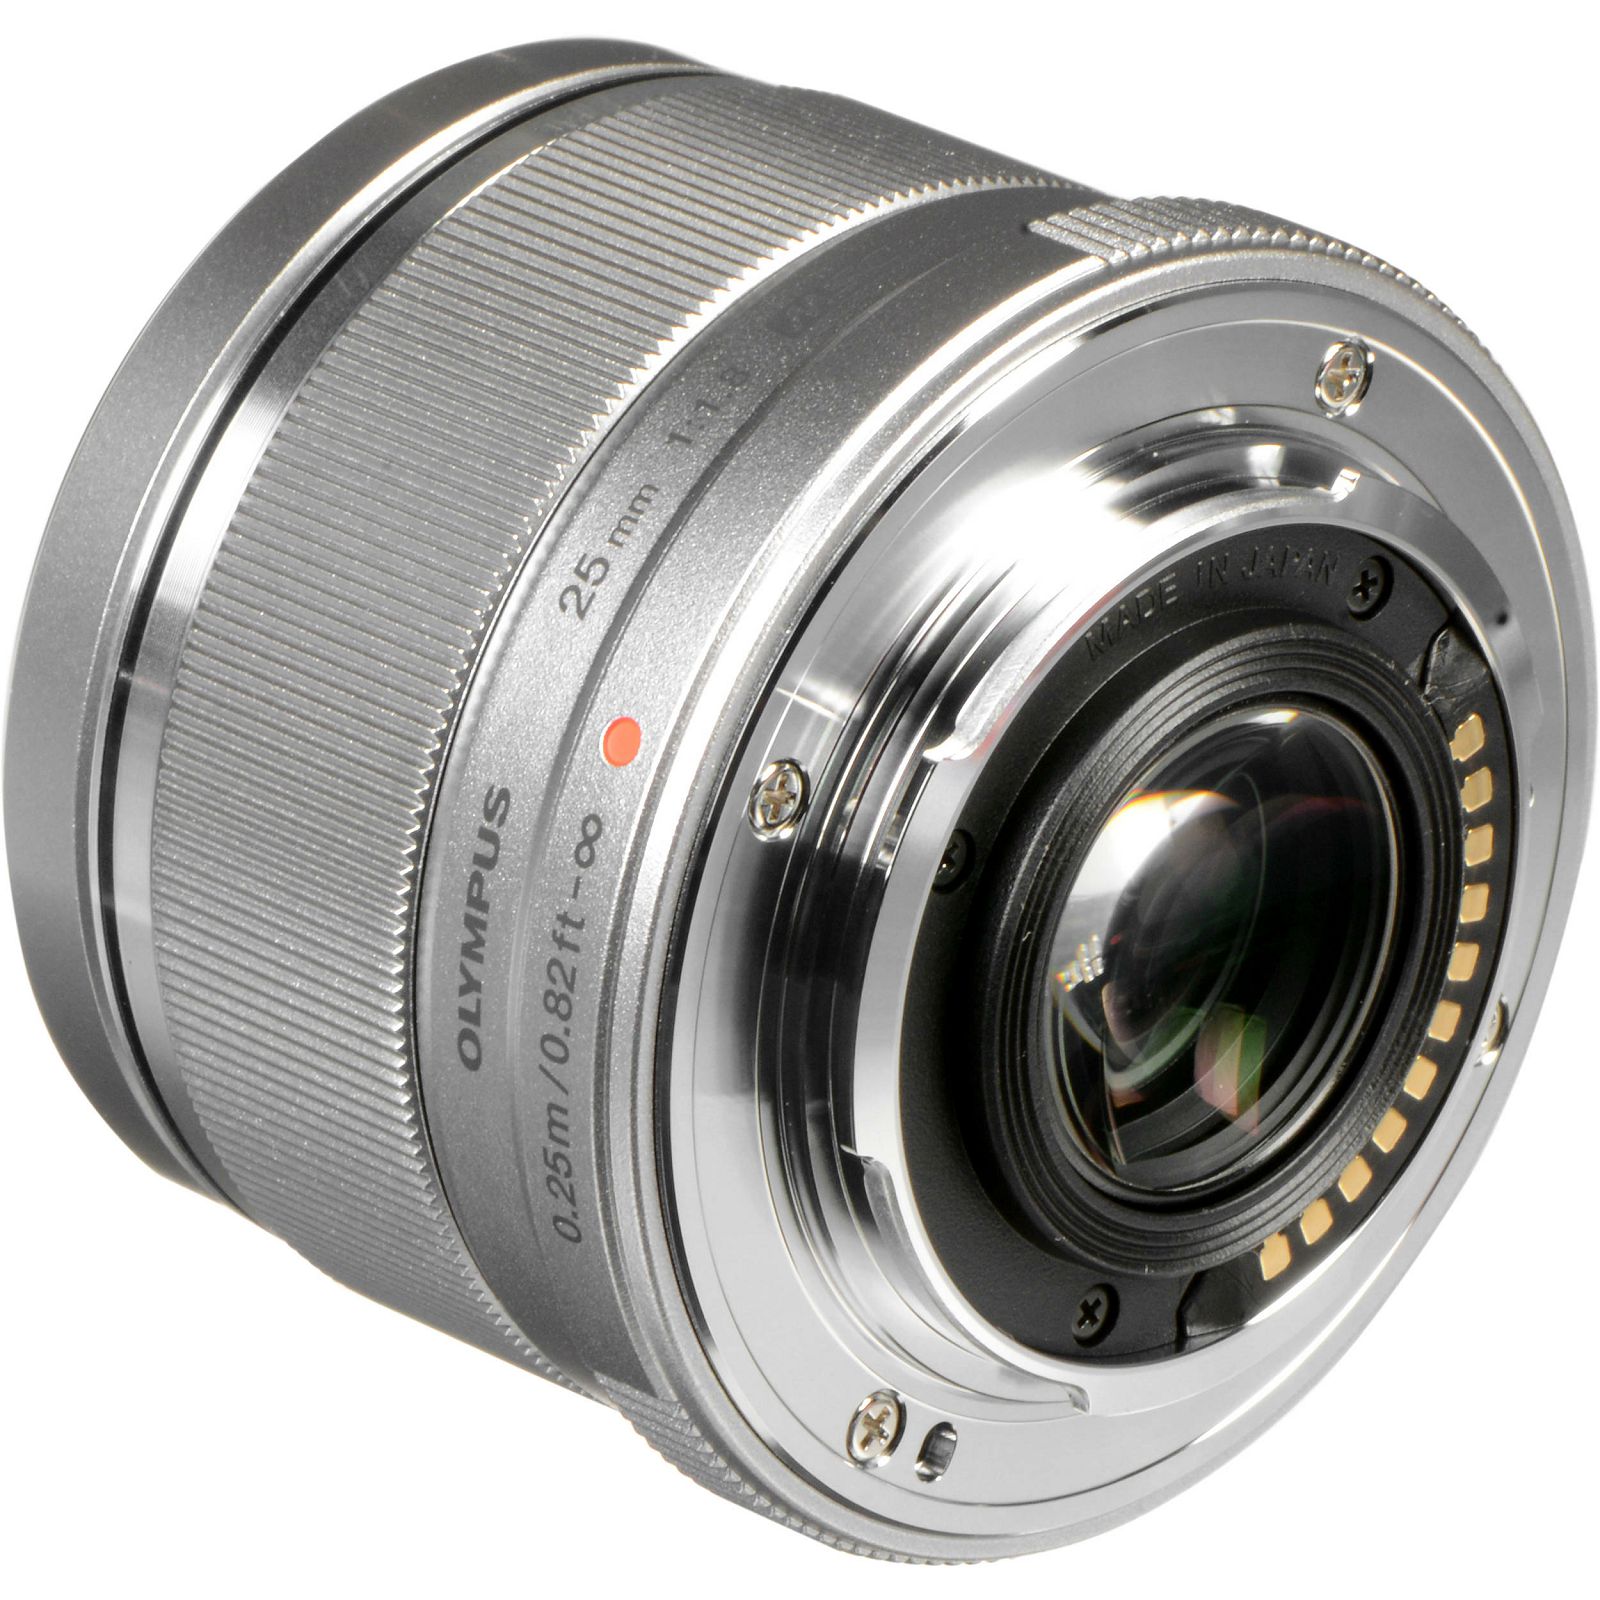 Olympus M. Zuiko Digital 25mm f/1.8 Silver Premium objektiv fiksne žarišne duljine ES-M2518 25 1:1.8 f1.8 prime lens Micro Four Thirds MFT micro4/3" (V311060SW000)